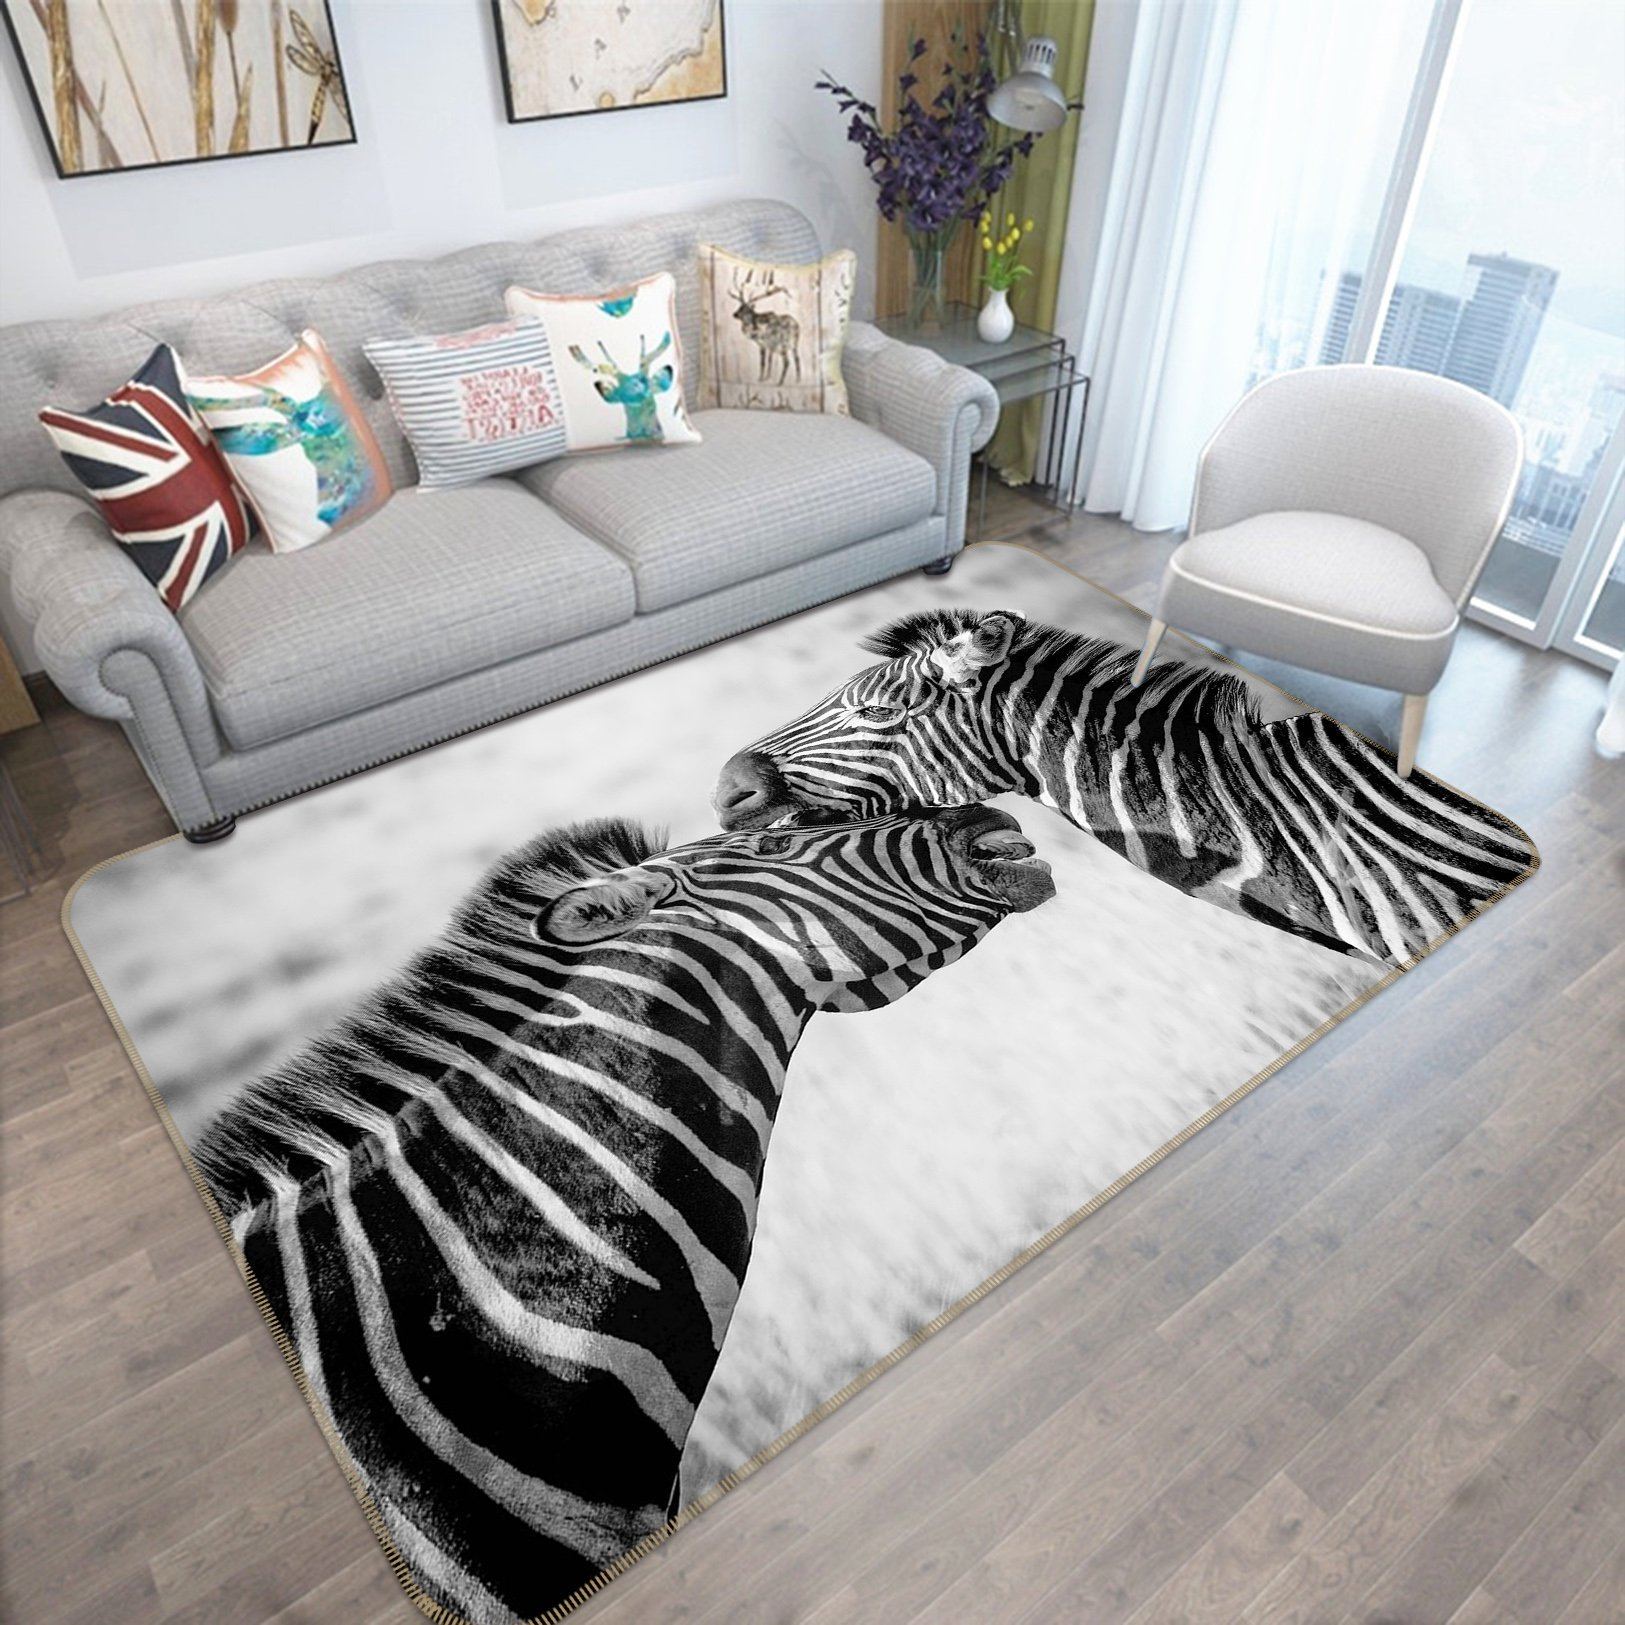 3D Zebra 650 Animal Non Slip Rug Mat Mat AJ Creativity Home 